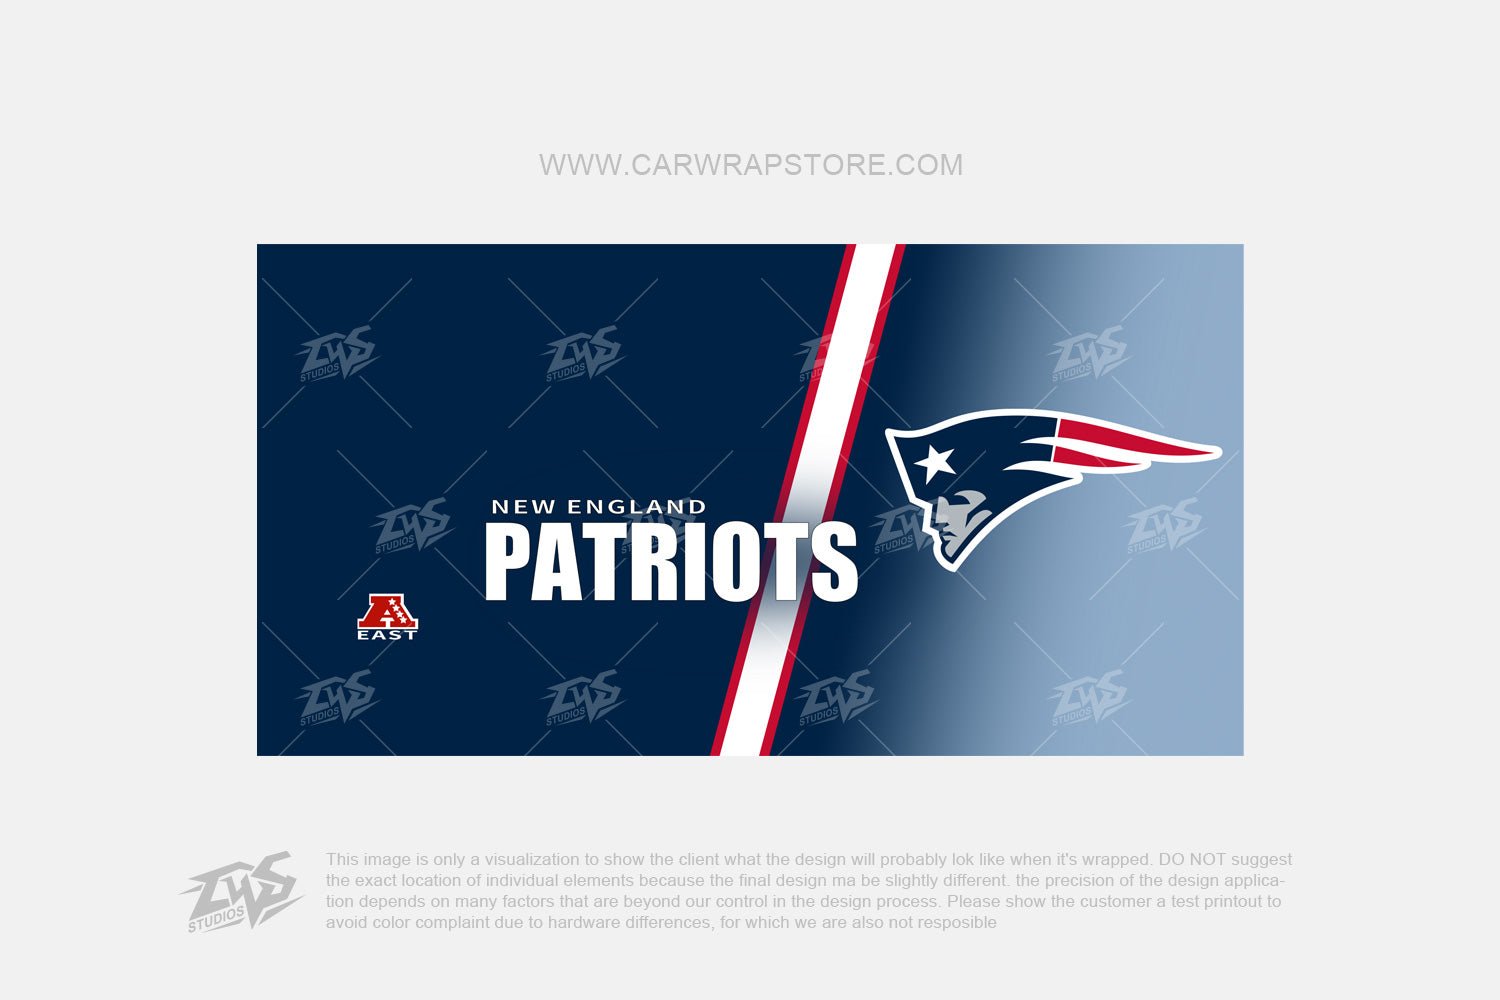 New England Patriots【NFL-09】 - Car Wrap Store